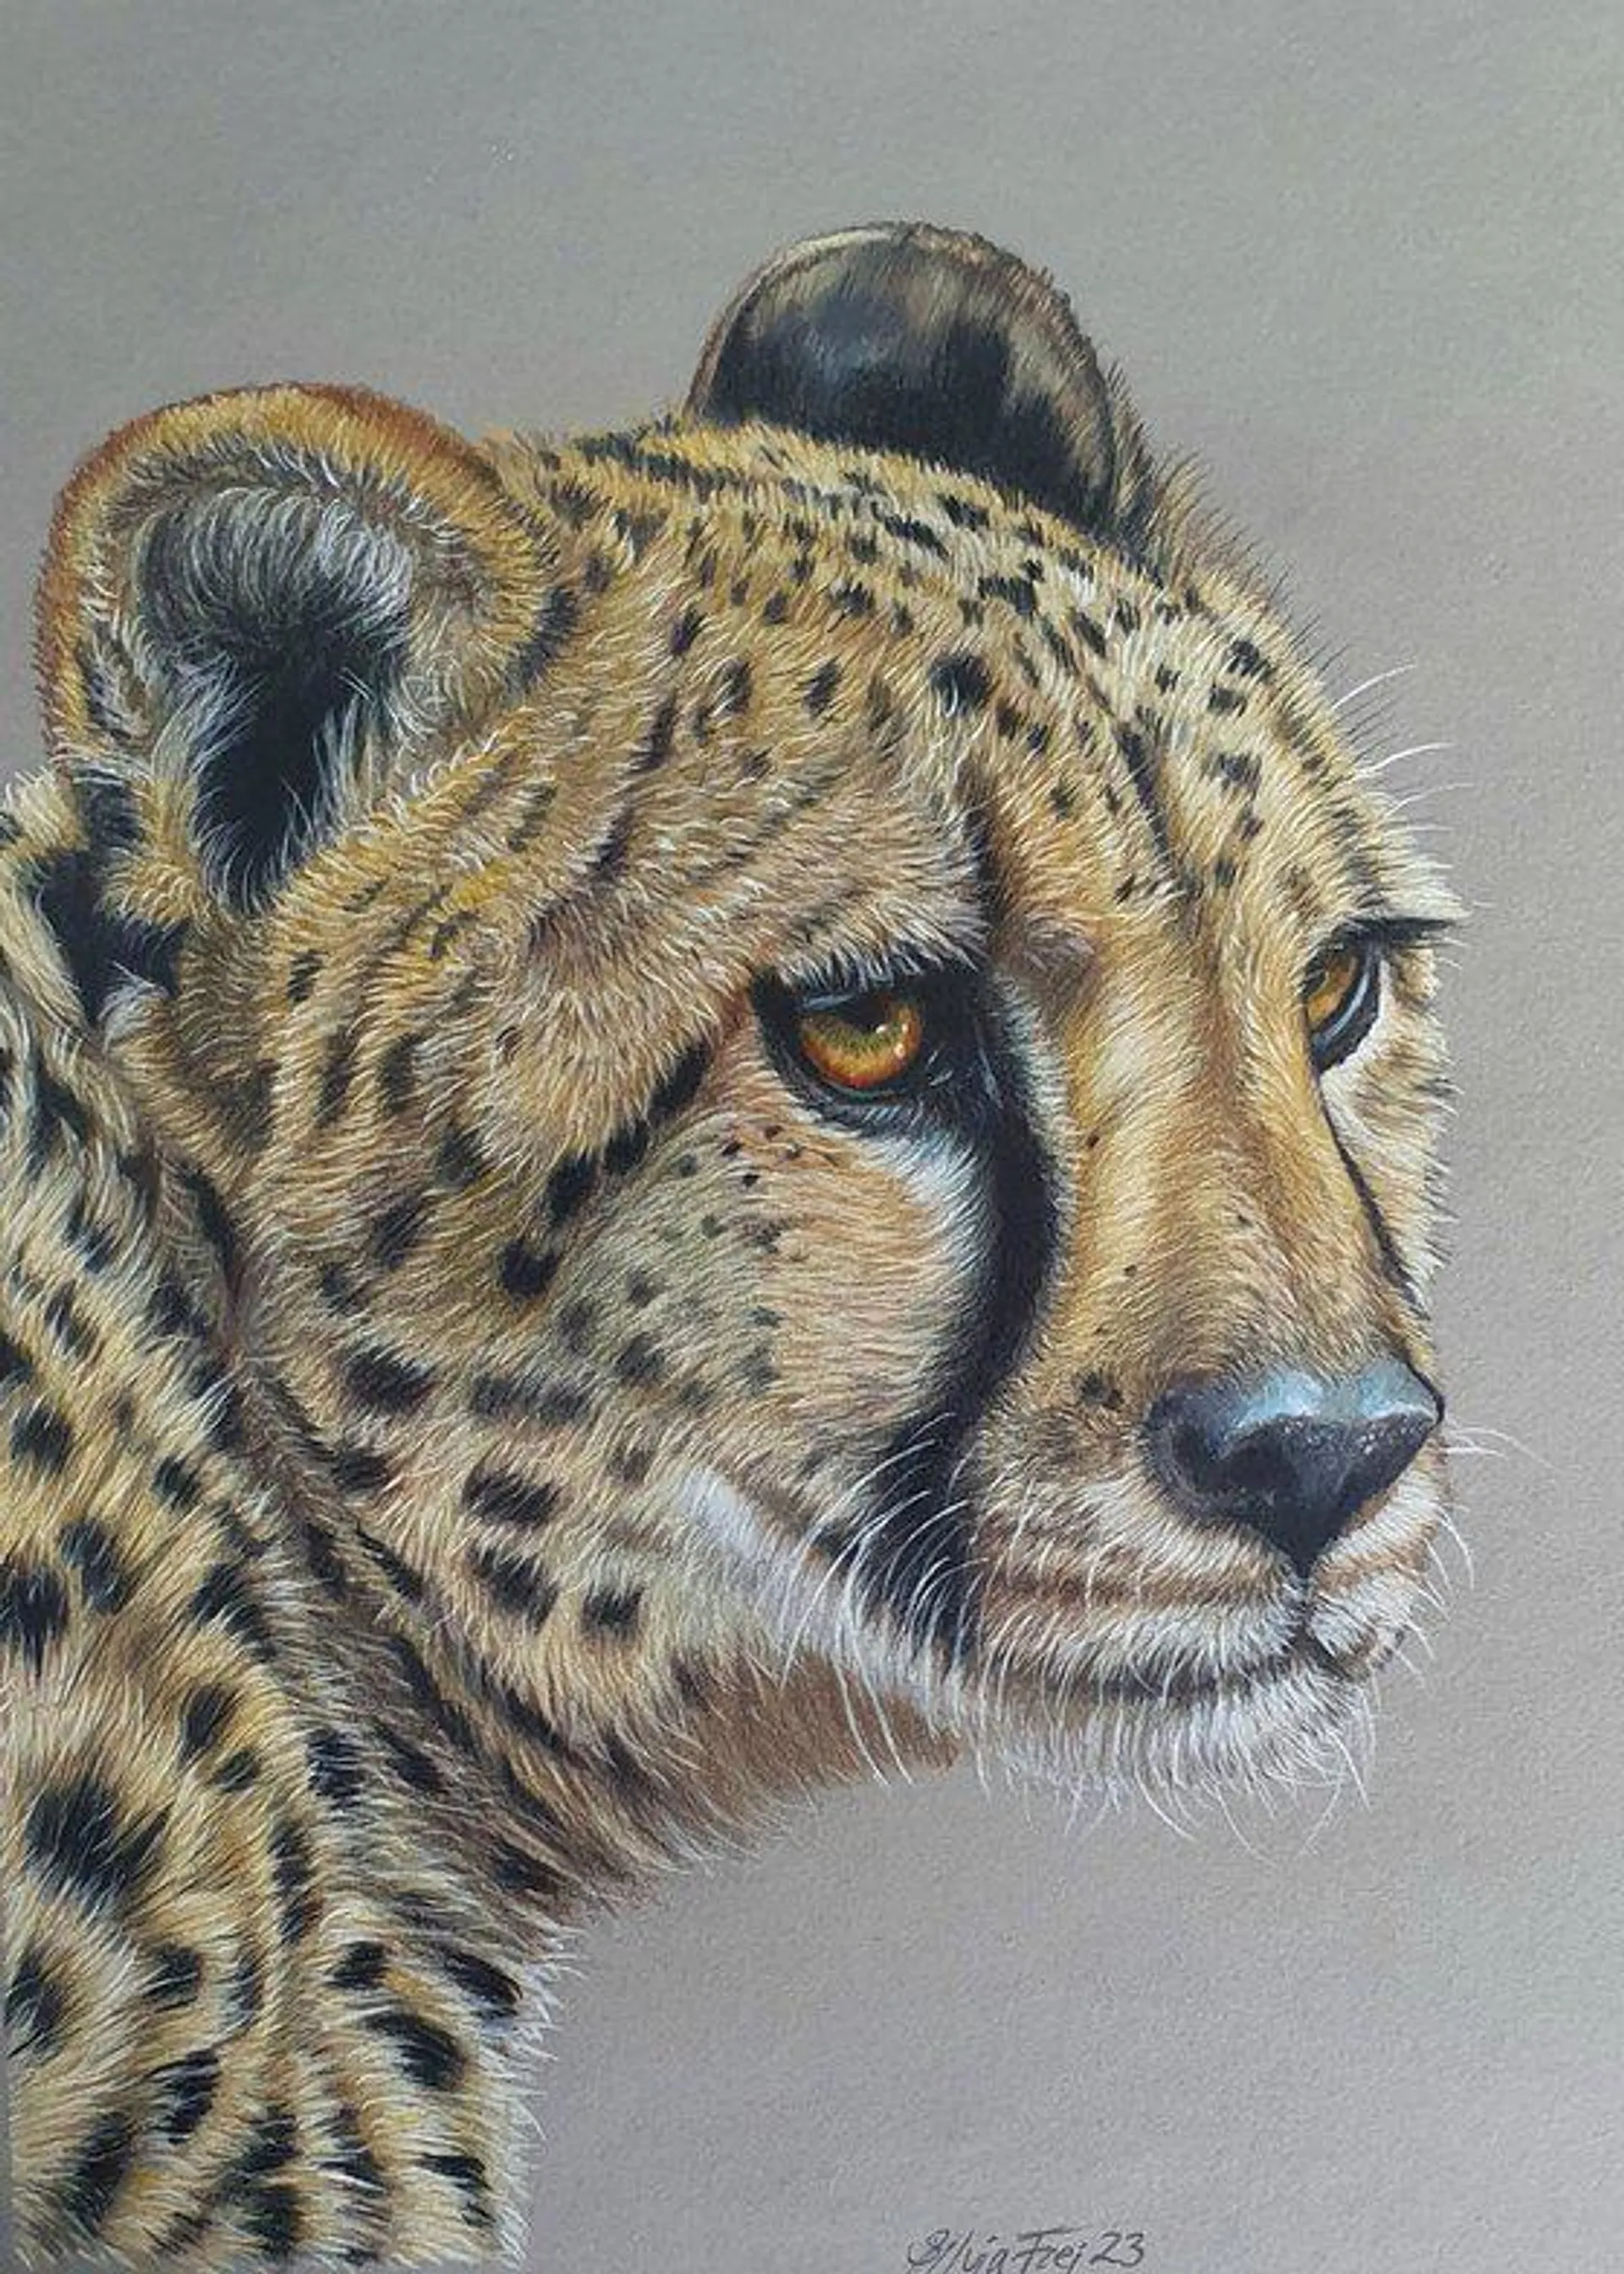 'Look out' - Cheetah portrait (2022)